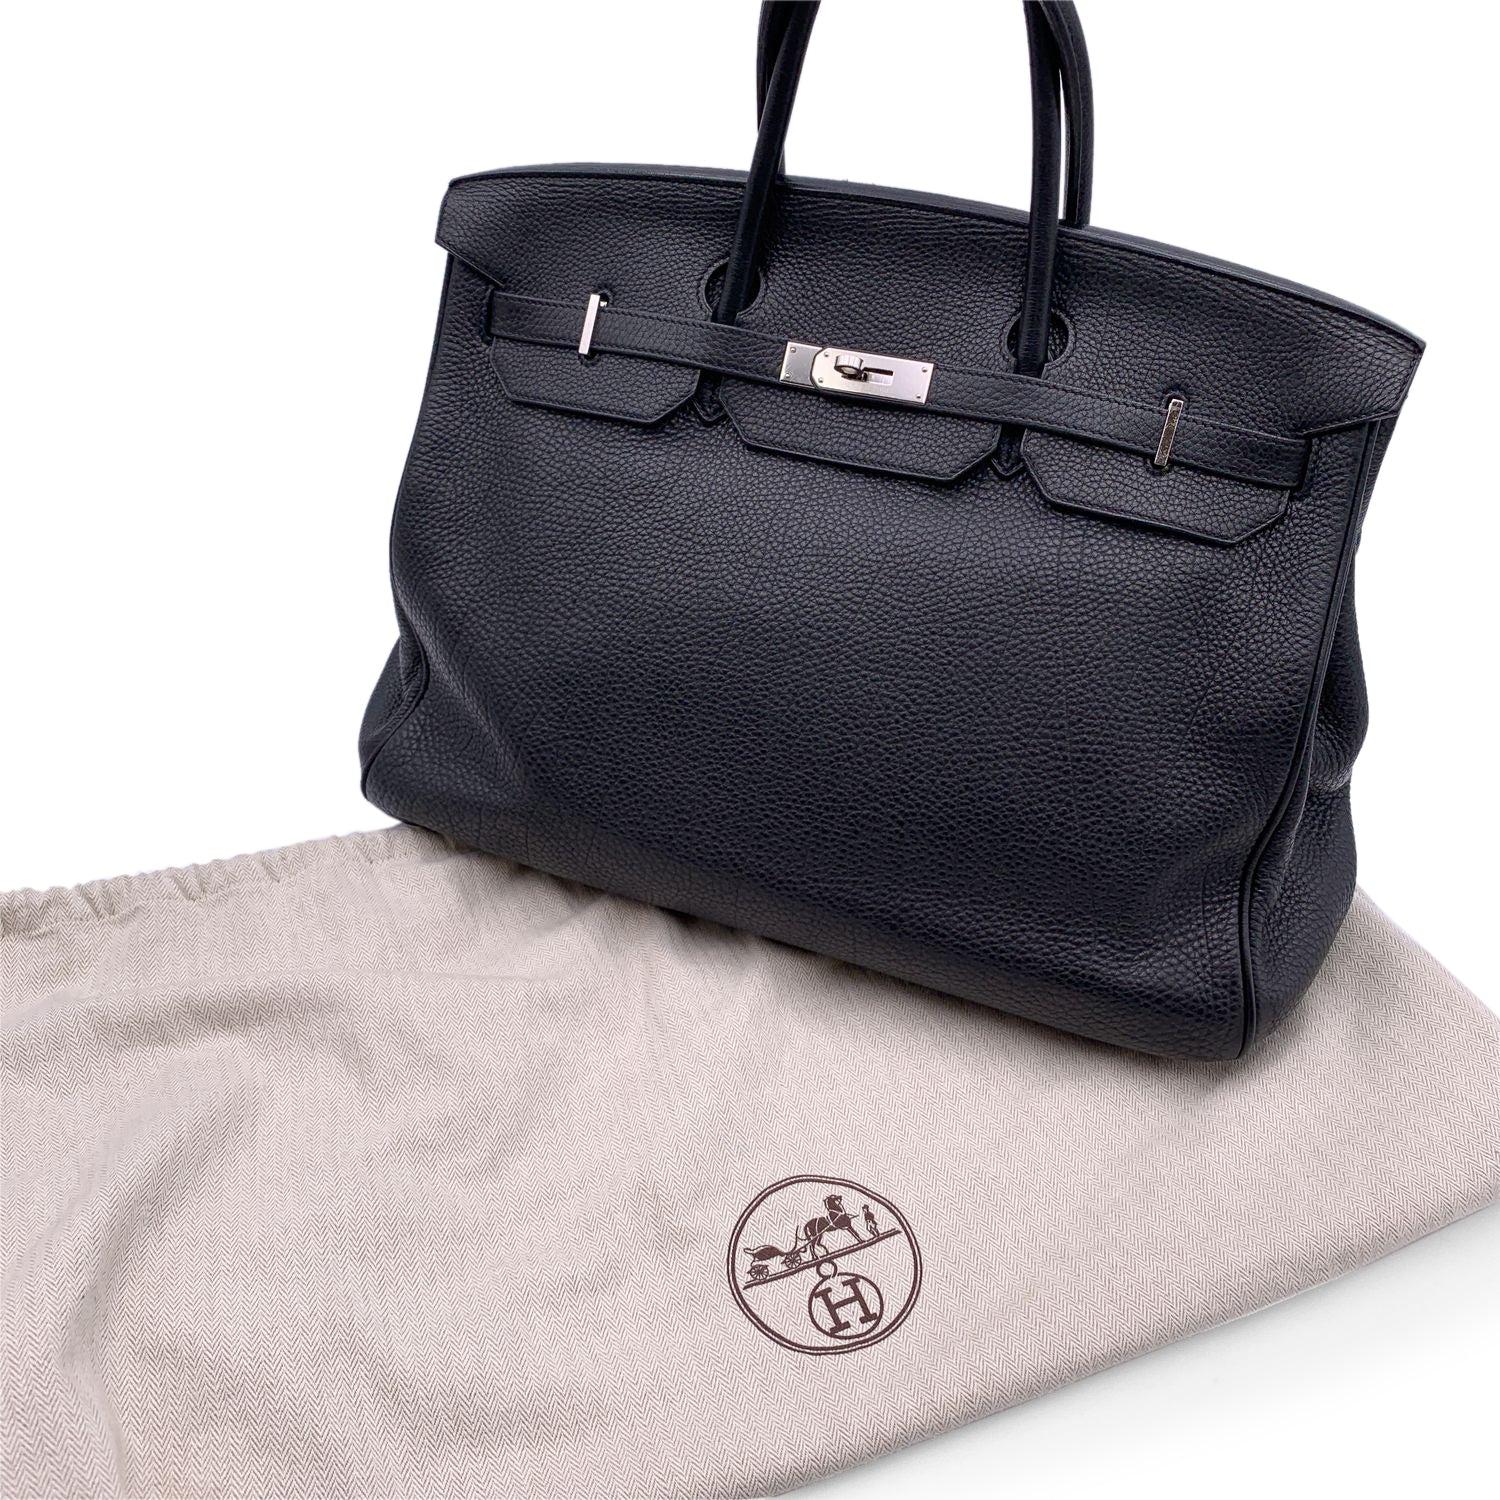 Hermes Black Togo Leather Birkin 40 Top Handle Bag Satchel Handbag 3